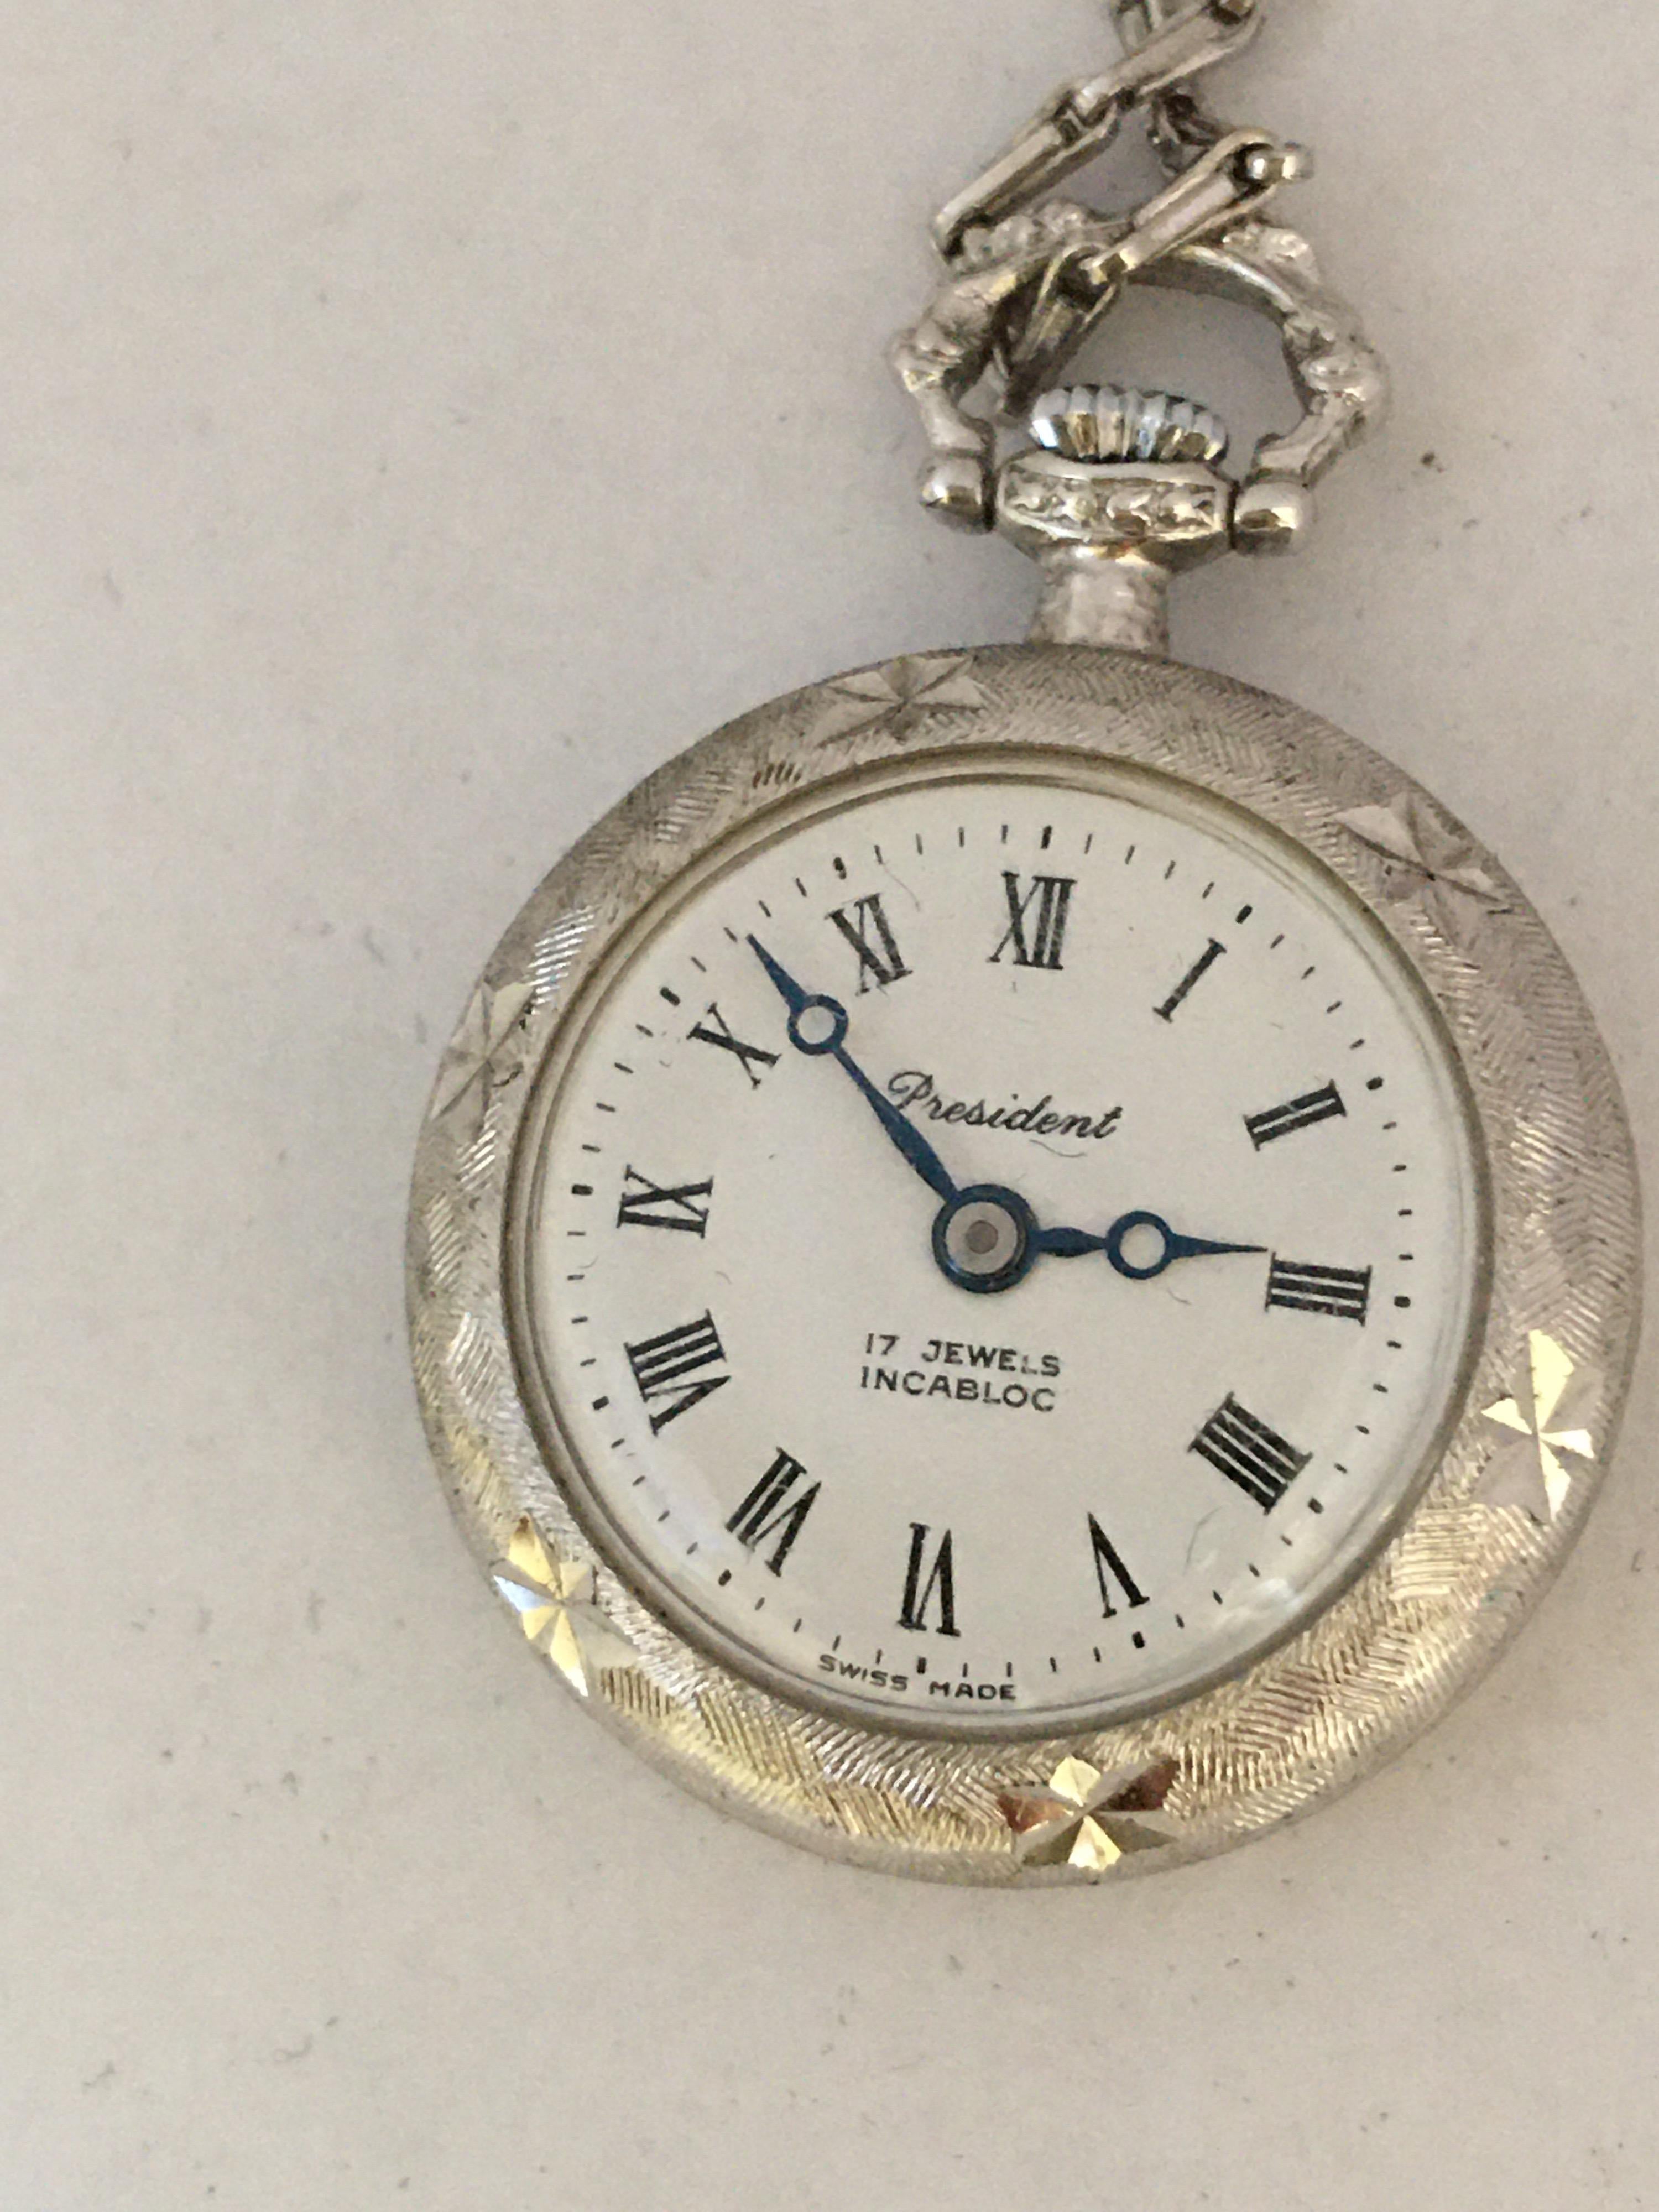 edison watch vintage